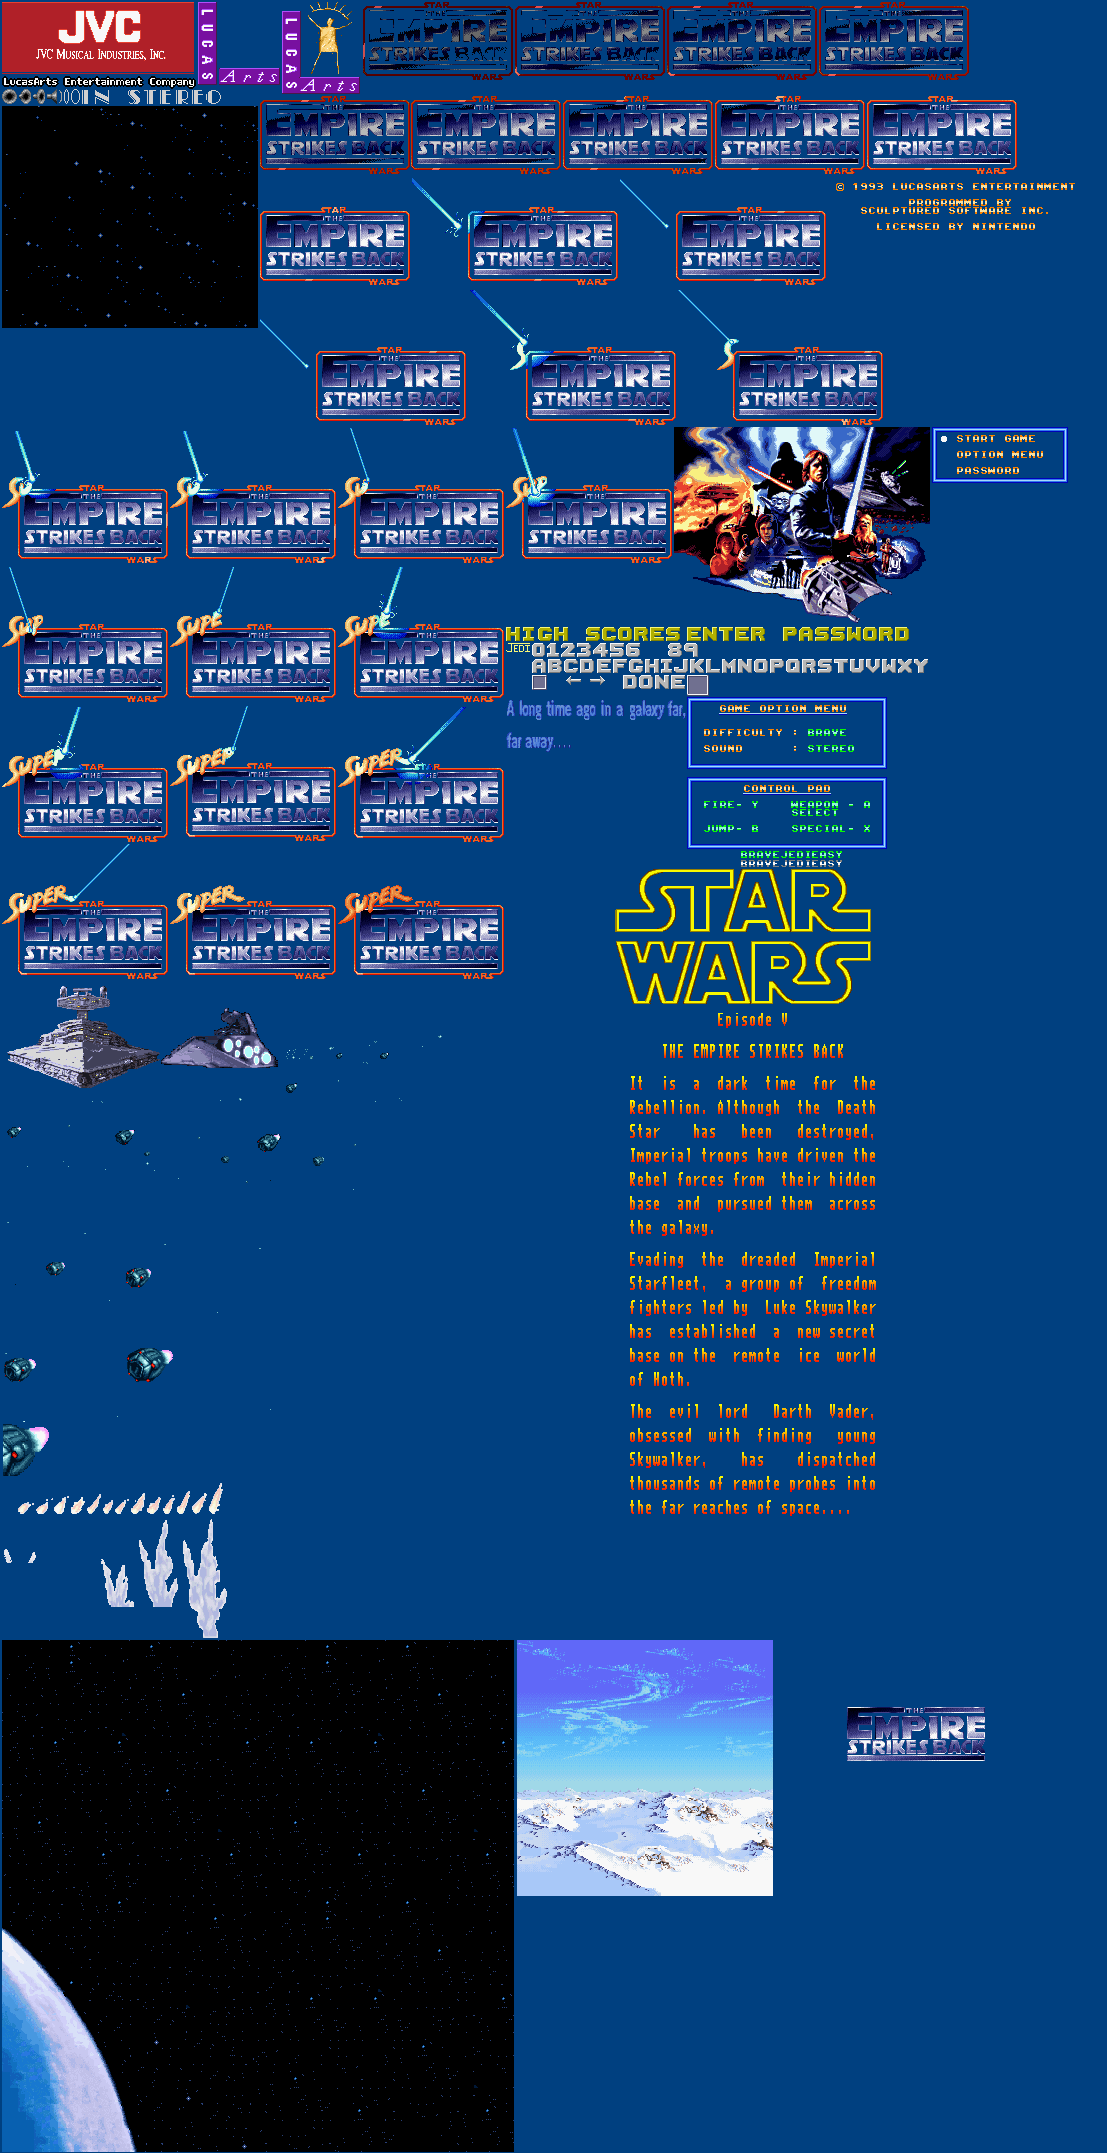 Super Star Wars 2: The Empire Strikes Back - Title Screen